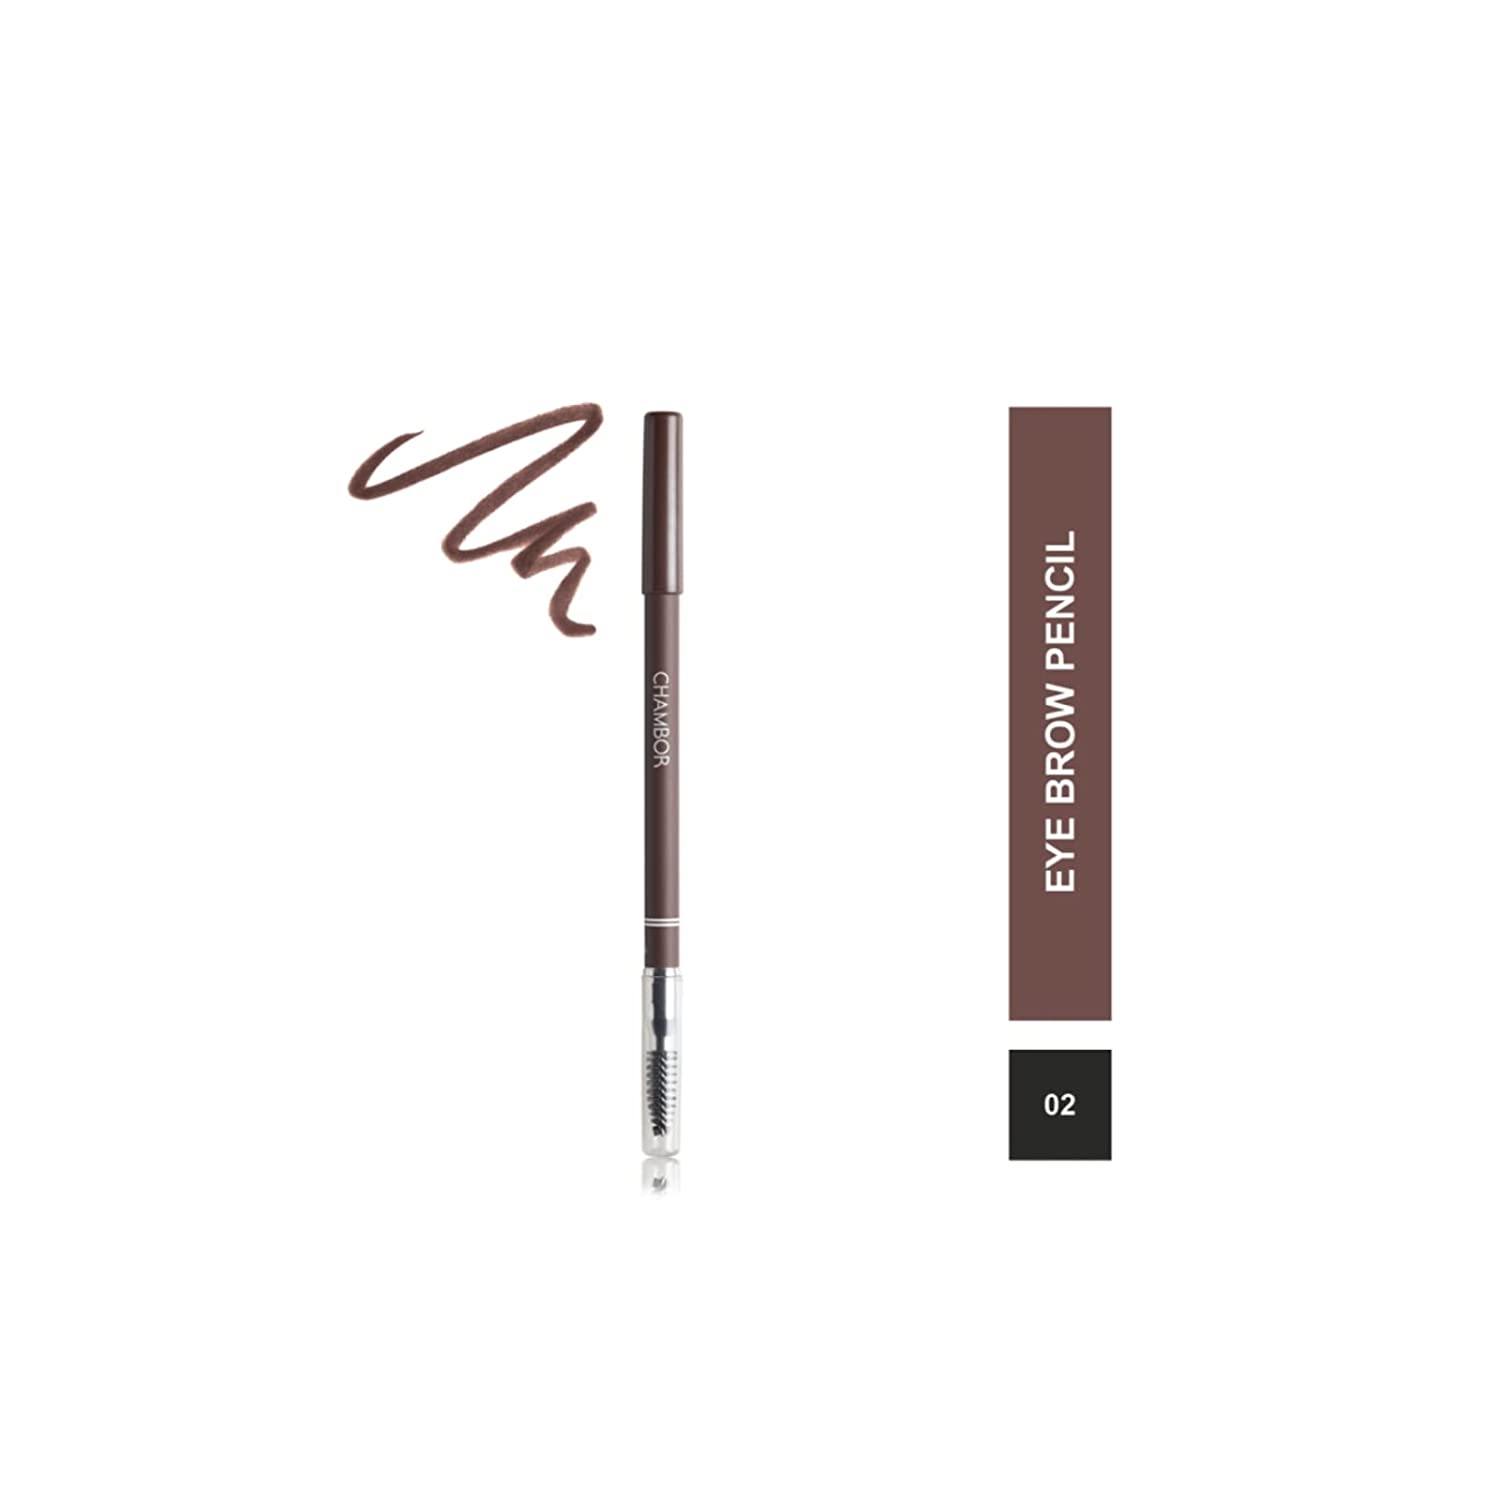 Chambor Eyebrow Pencil Make Up - Dark Brown #02